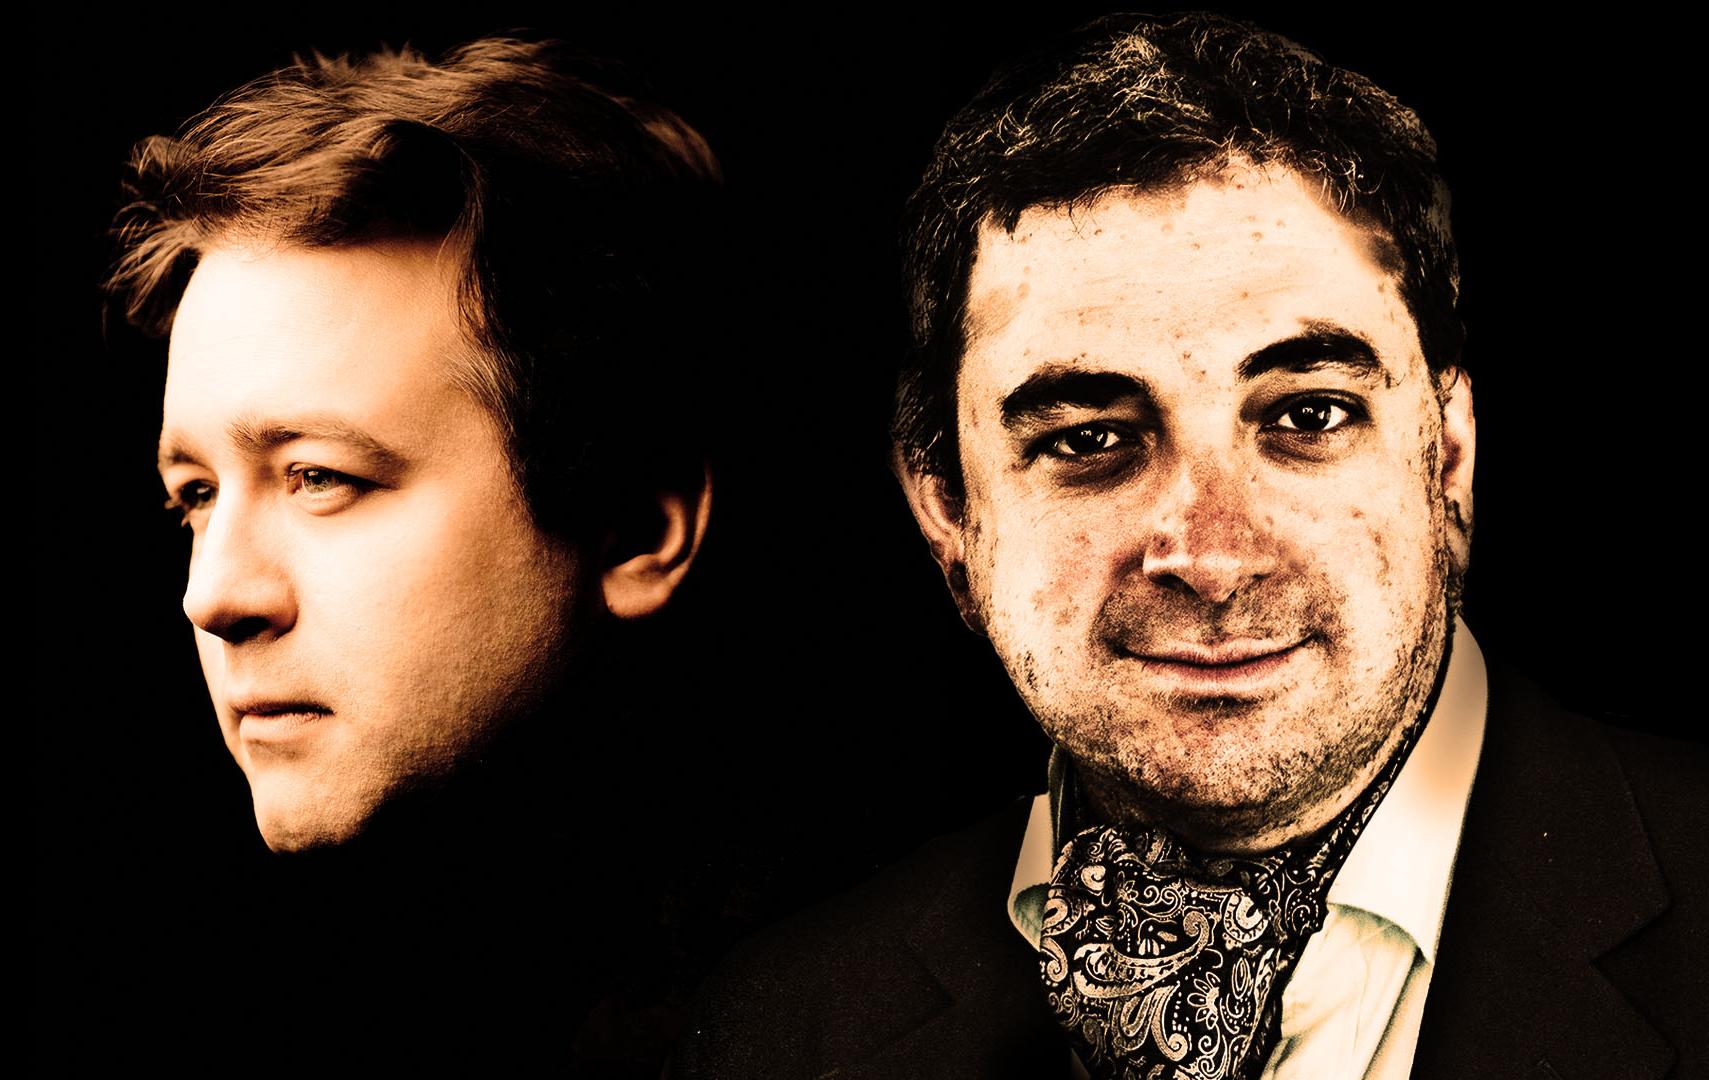 Piano duo. Alexey Volodin and Konstantin Lifschitz